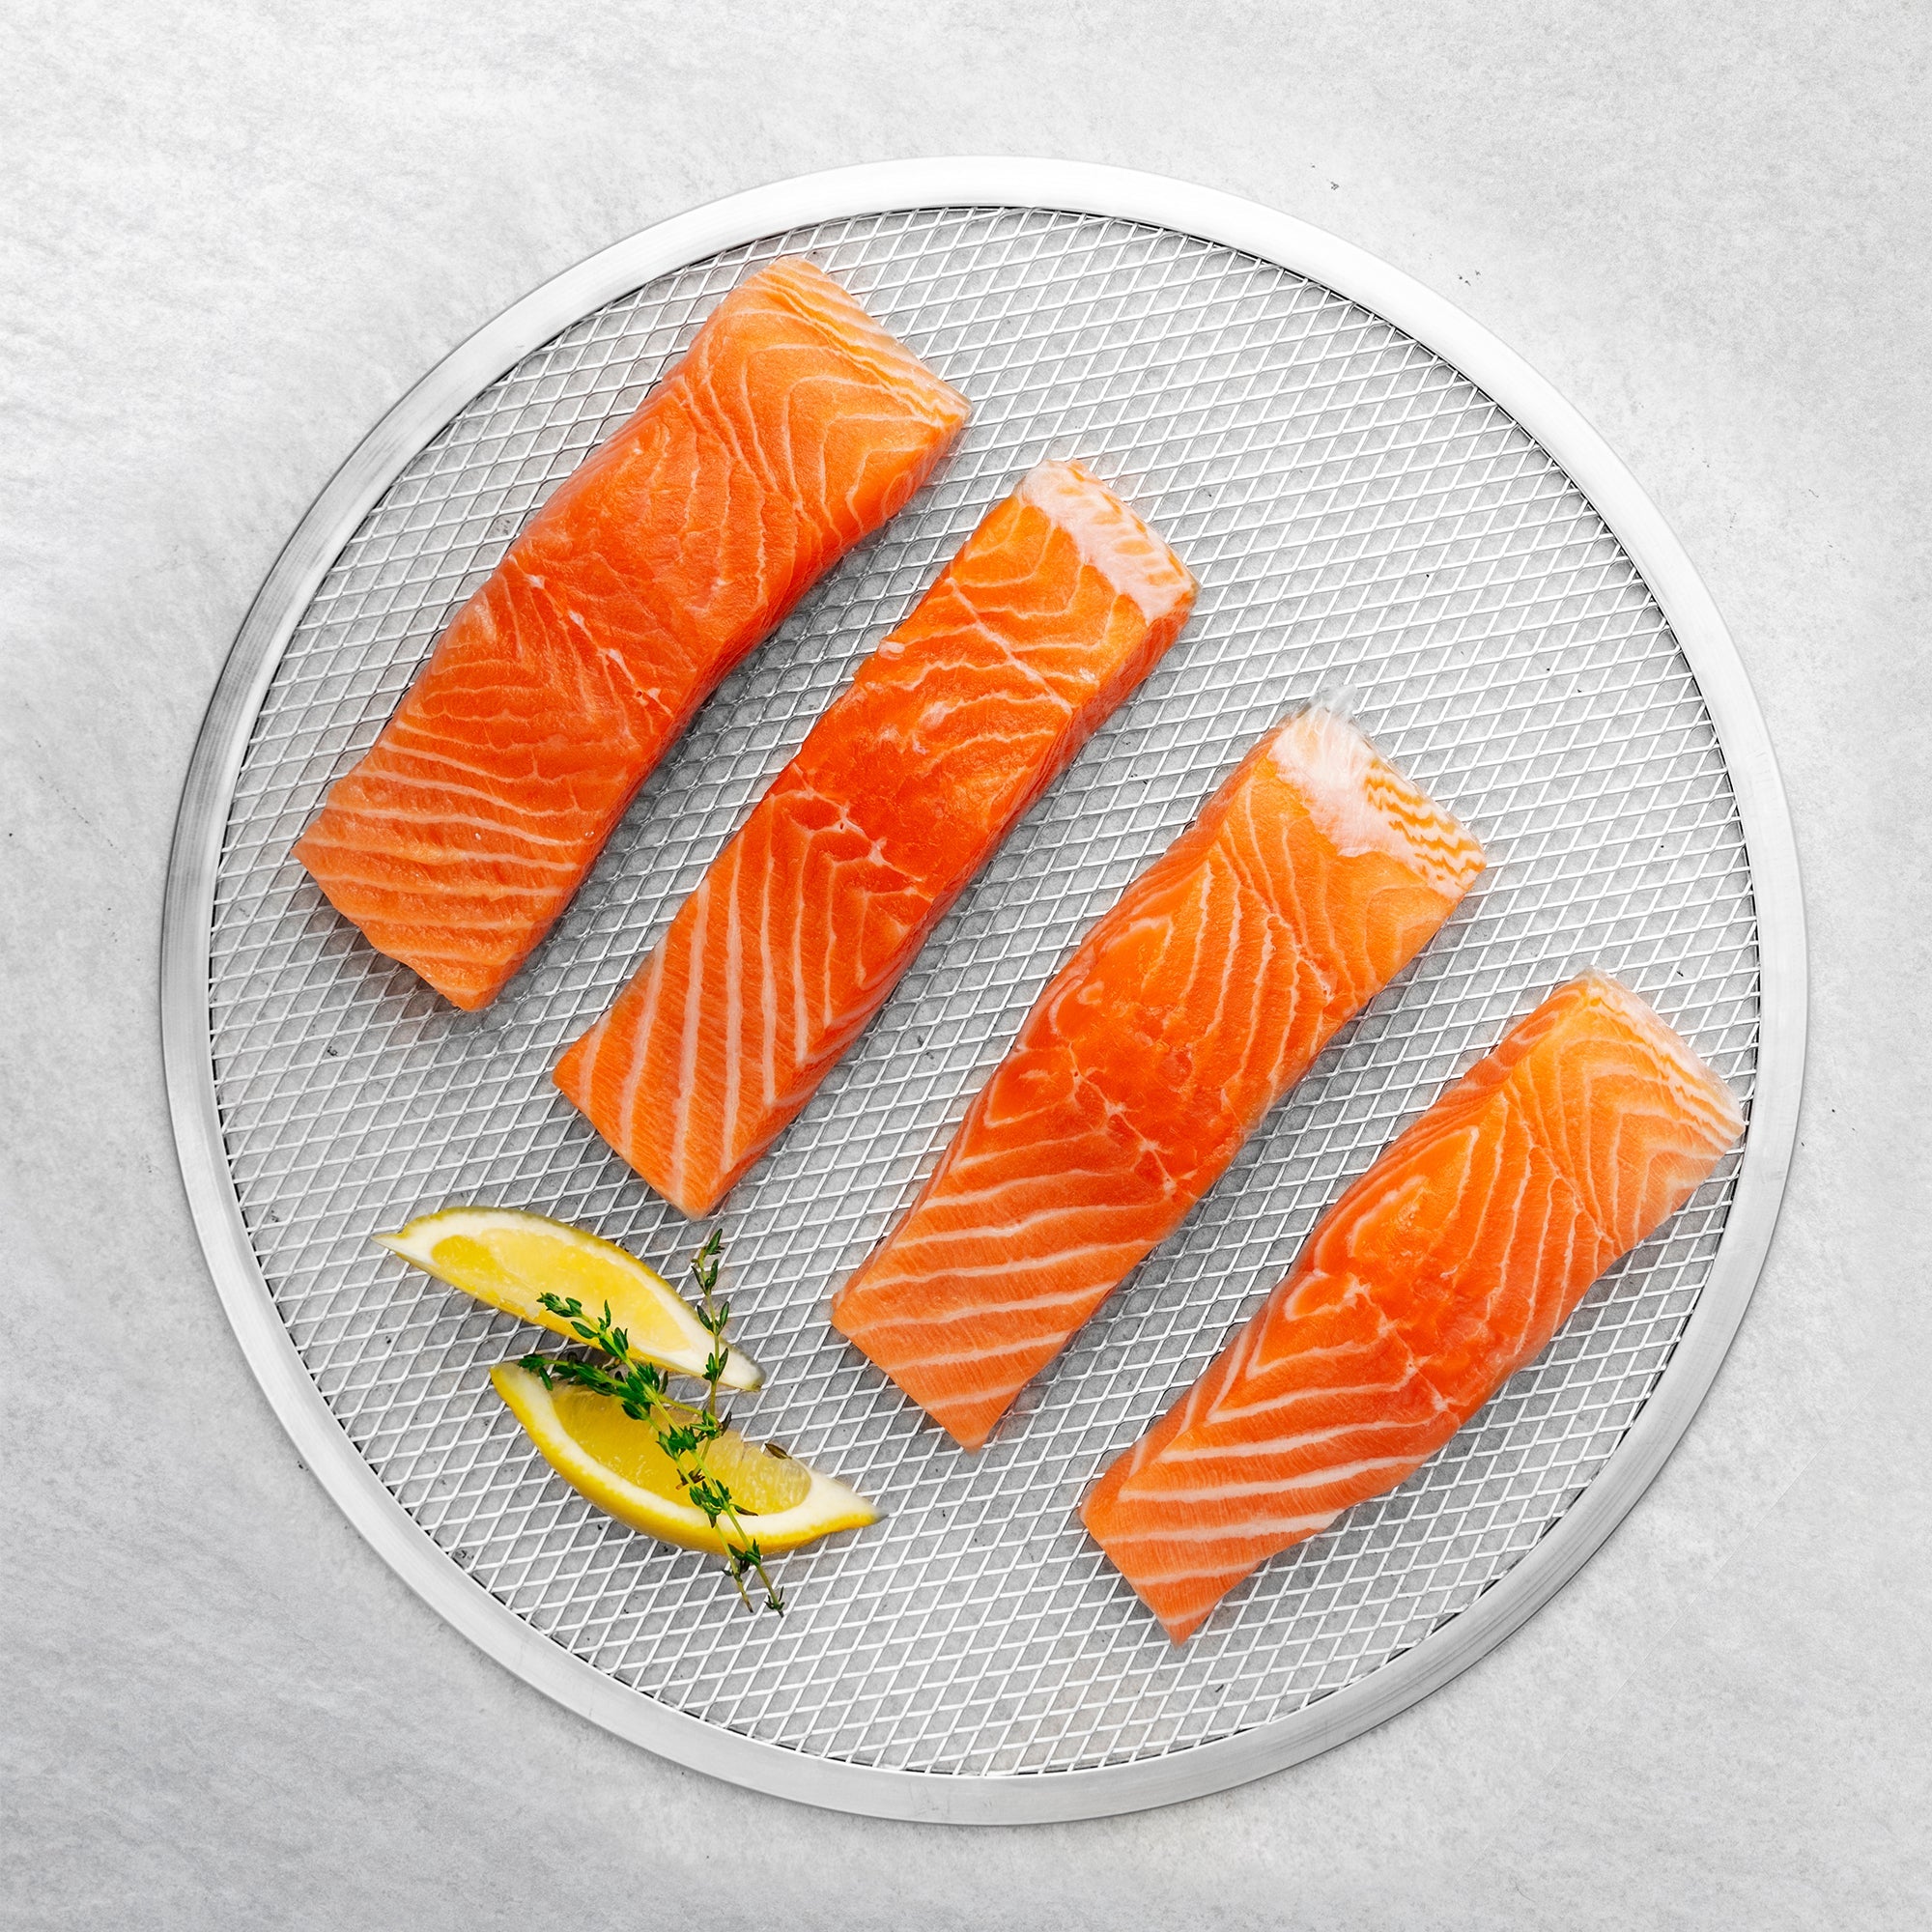 Why is Frozen Salmon Cheaper than Fresh – Oshen Salmon